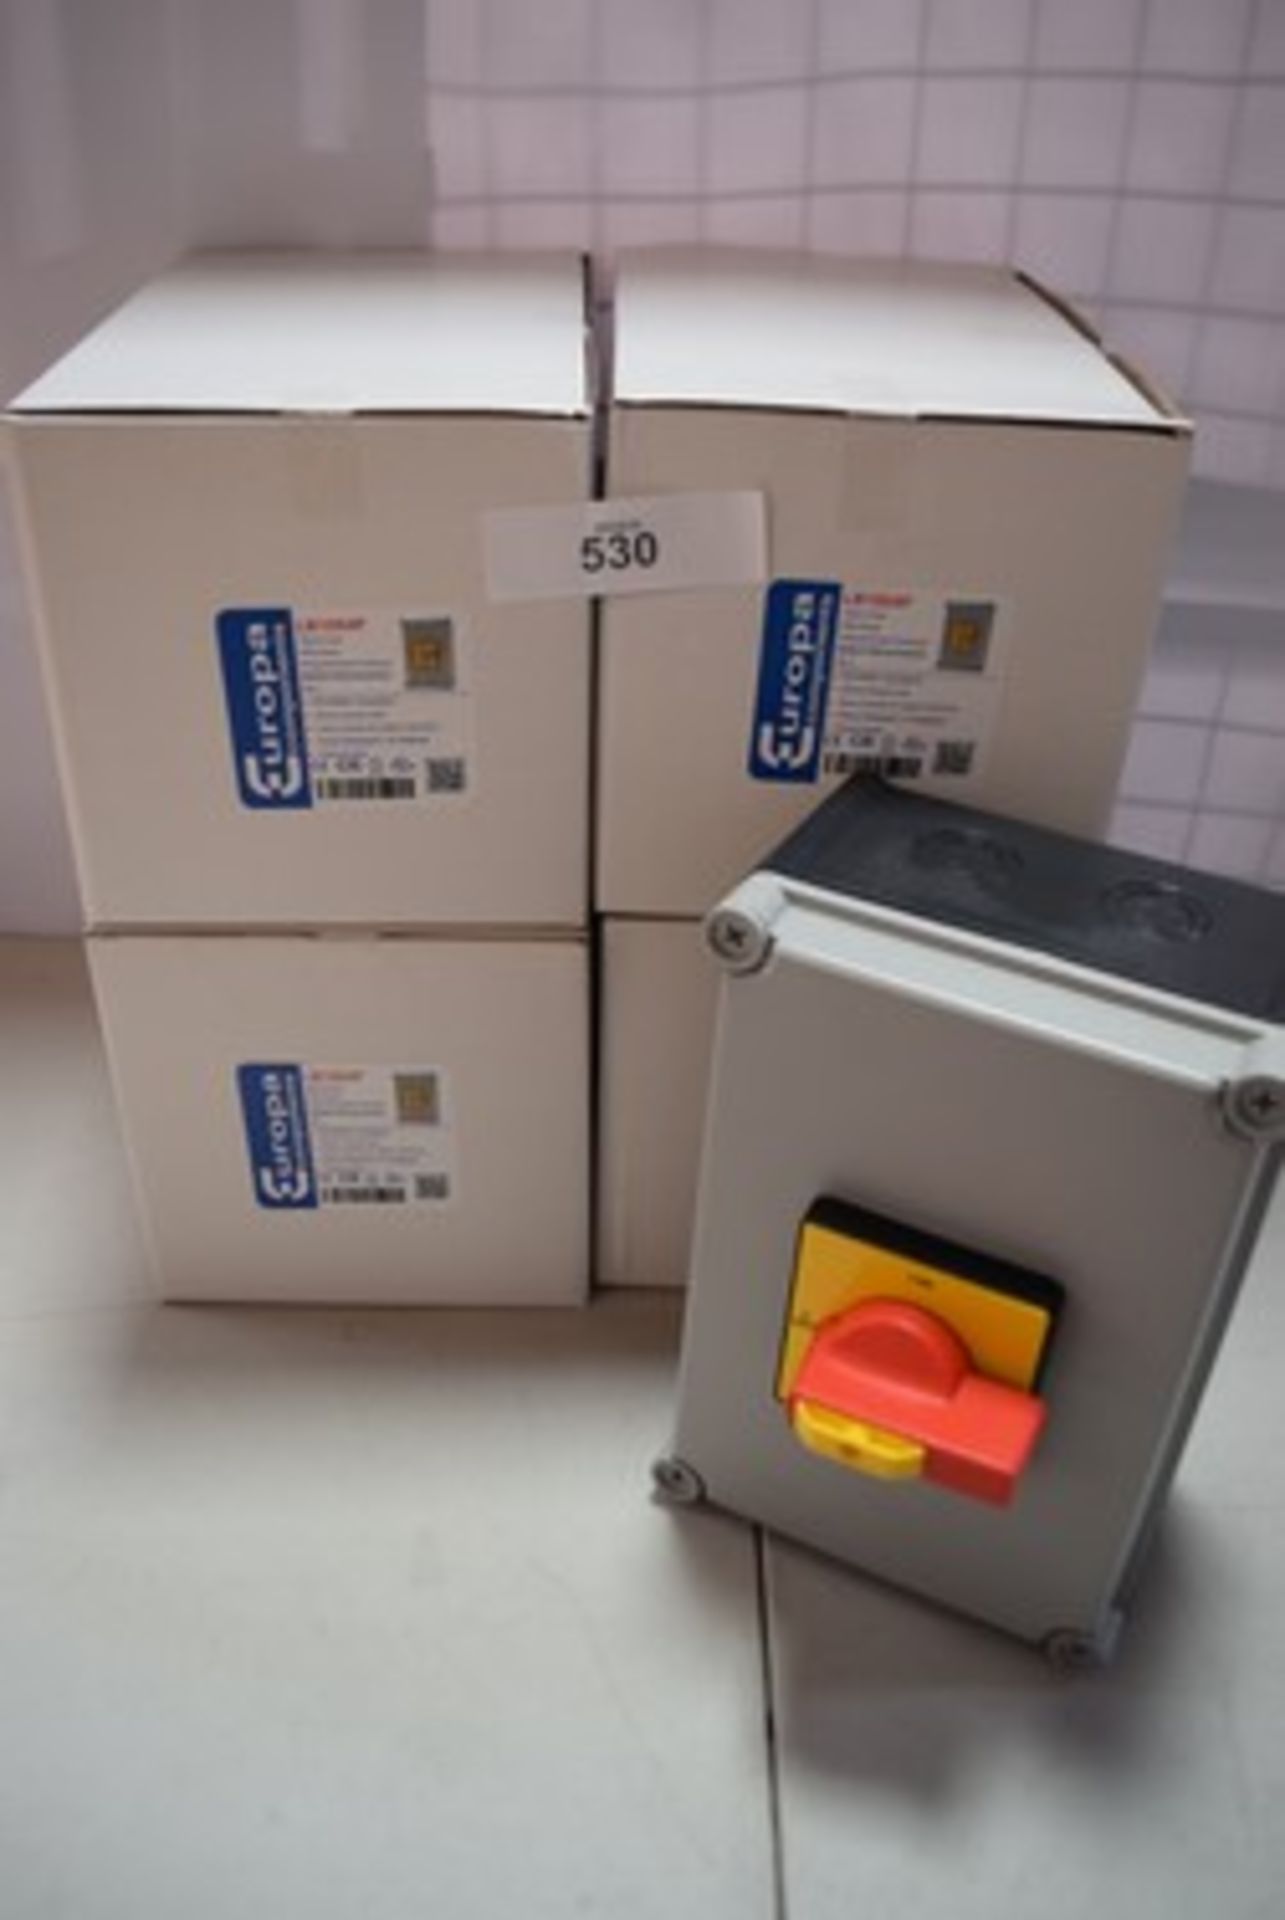 5 x Europa rotary isolator, 4 pole, 100amp, item No: LB1004P - new in box (GS28C)